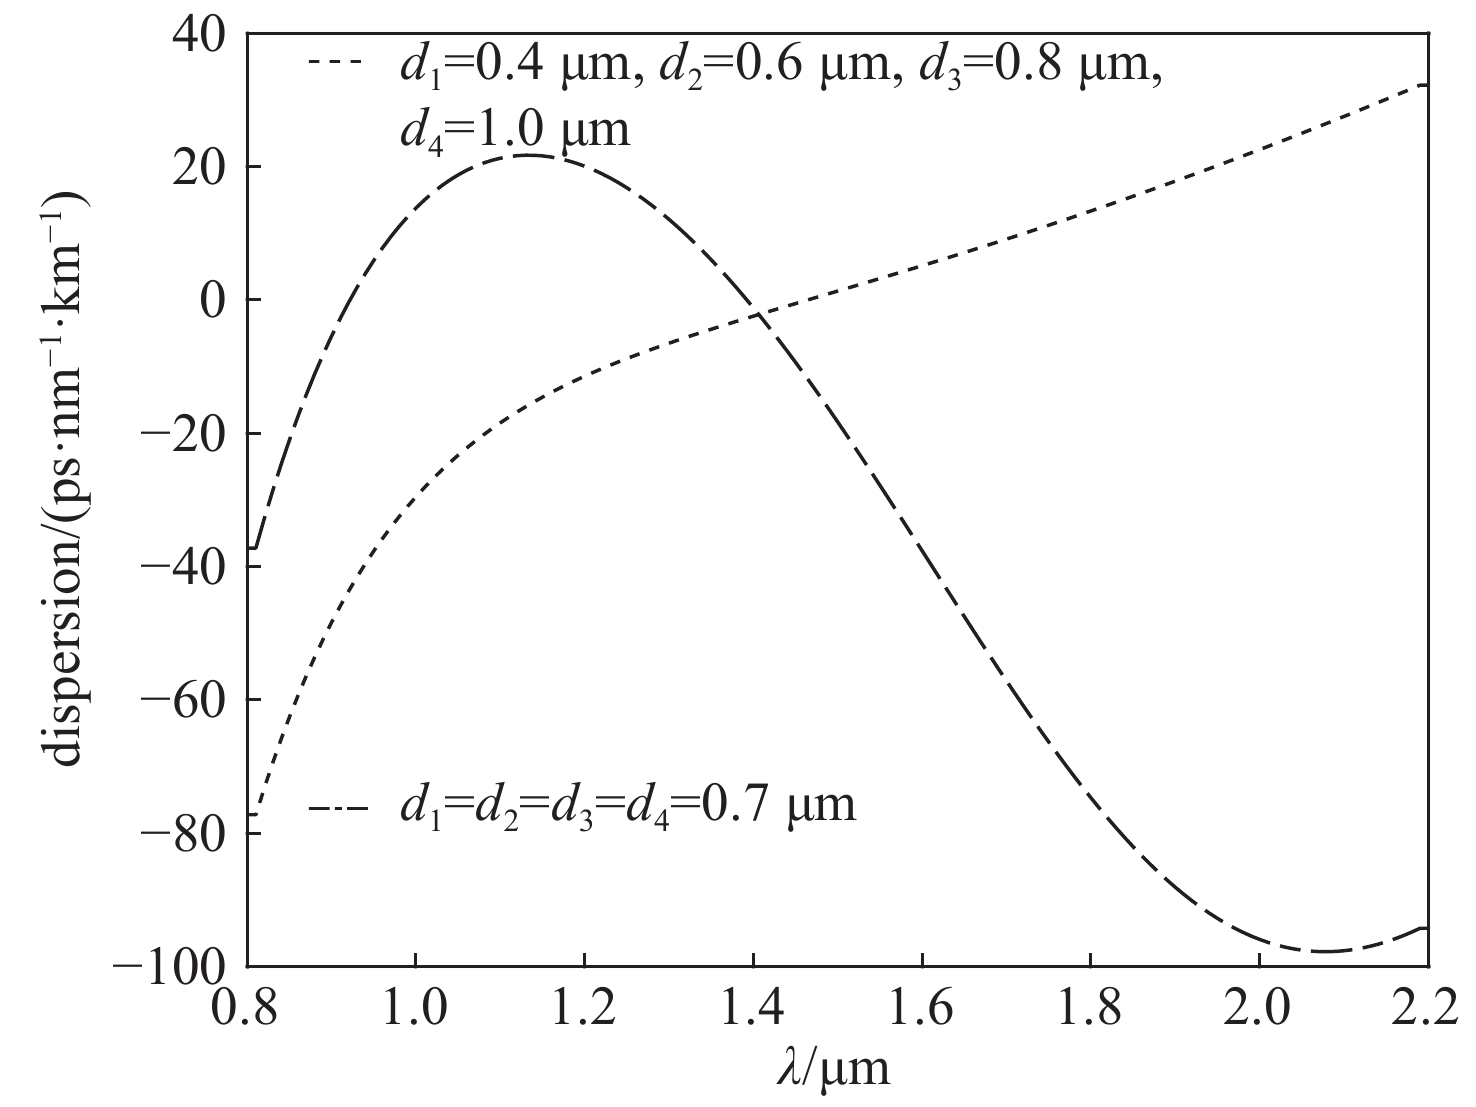 Dispersion comparison between uniform and progressive aperture